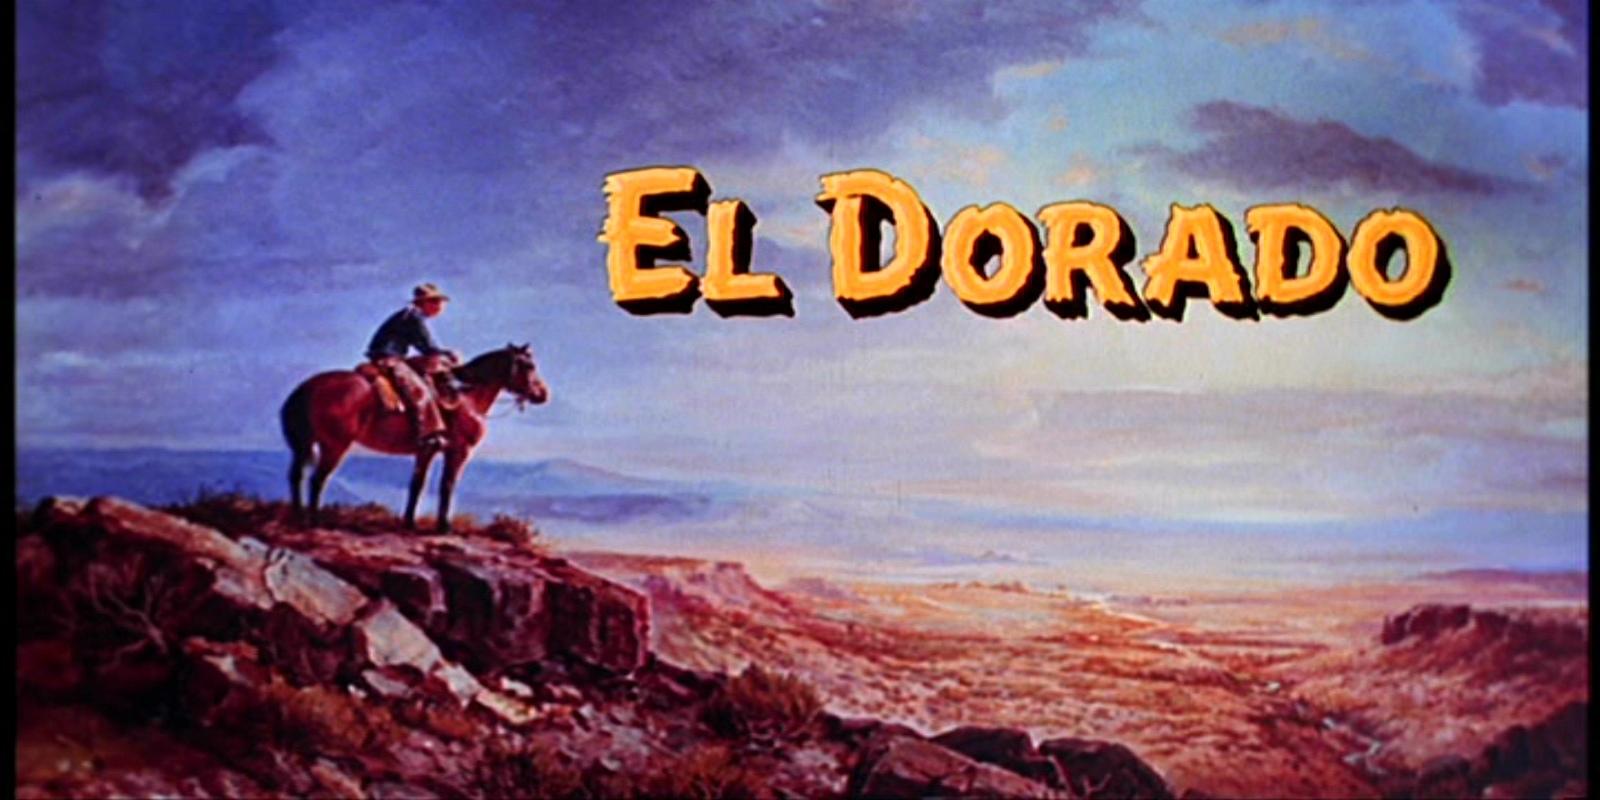 El Dorado at 1280 x 960 size wallpapers HD quality